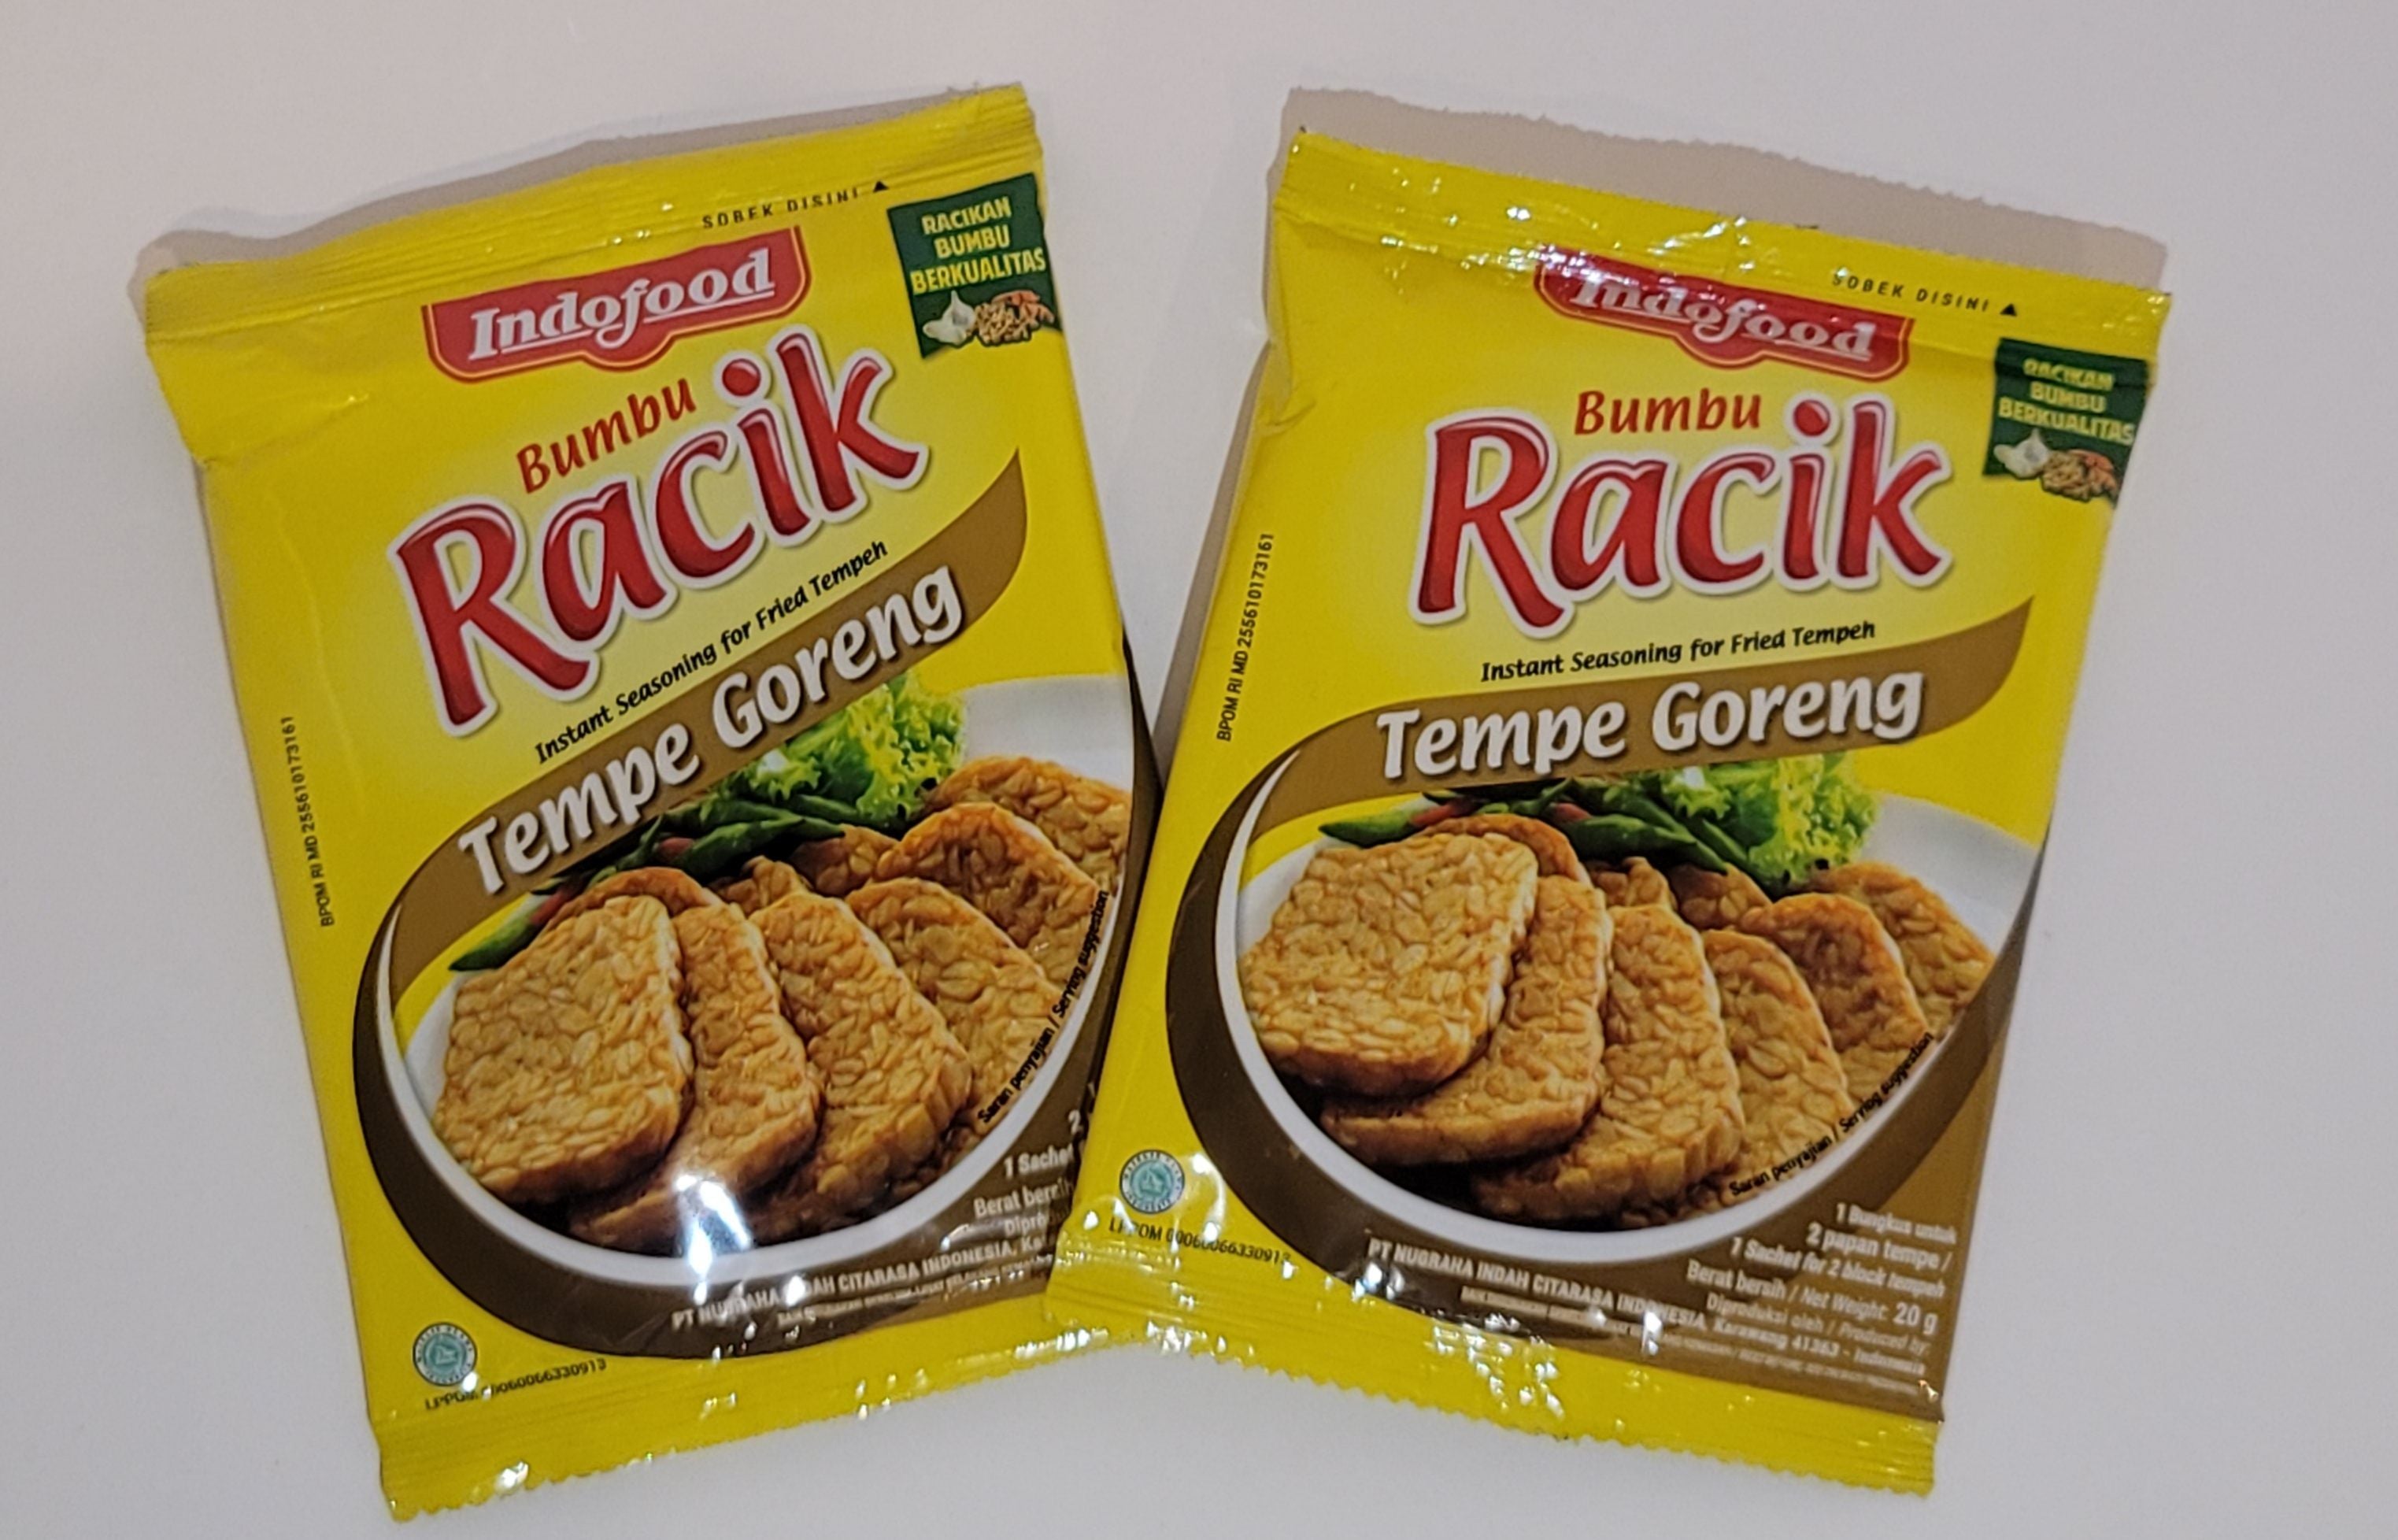 Indofood Racik Tempe Goreng (Instant Seasoning for Fried Tempeh)